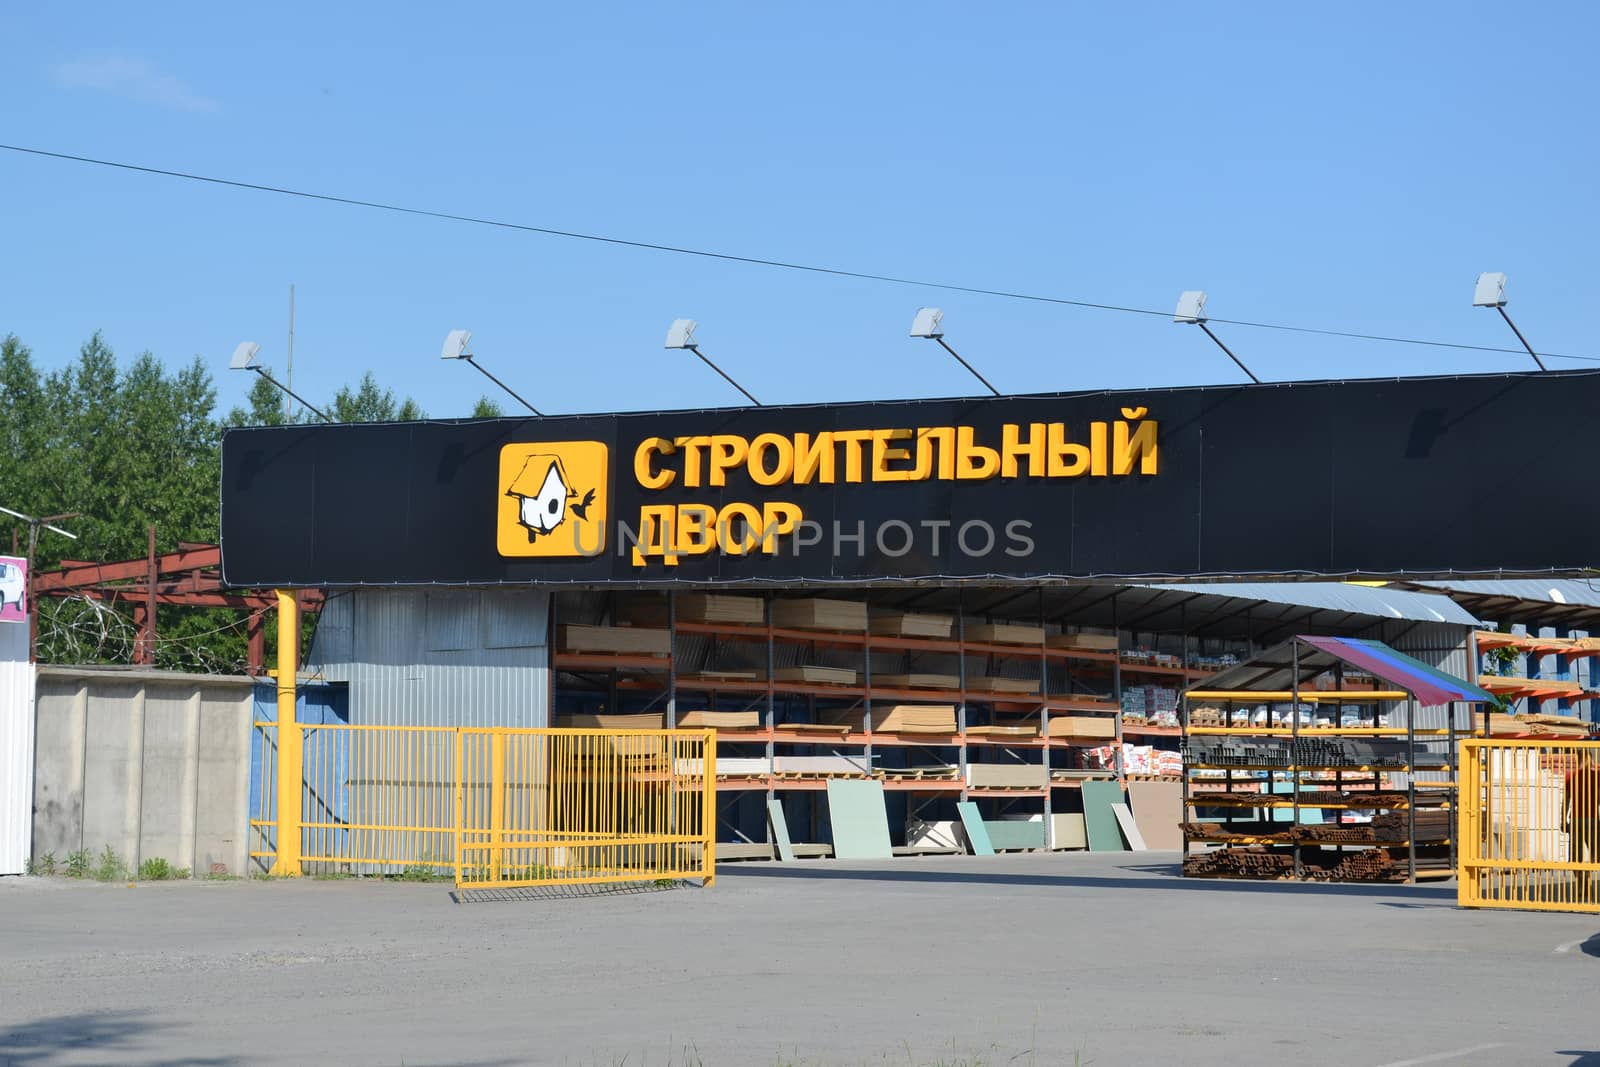 the warehouse shop "Construction Yard" in Tyumen, Russia. by veronka72